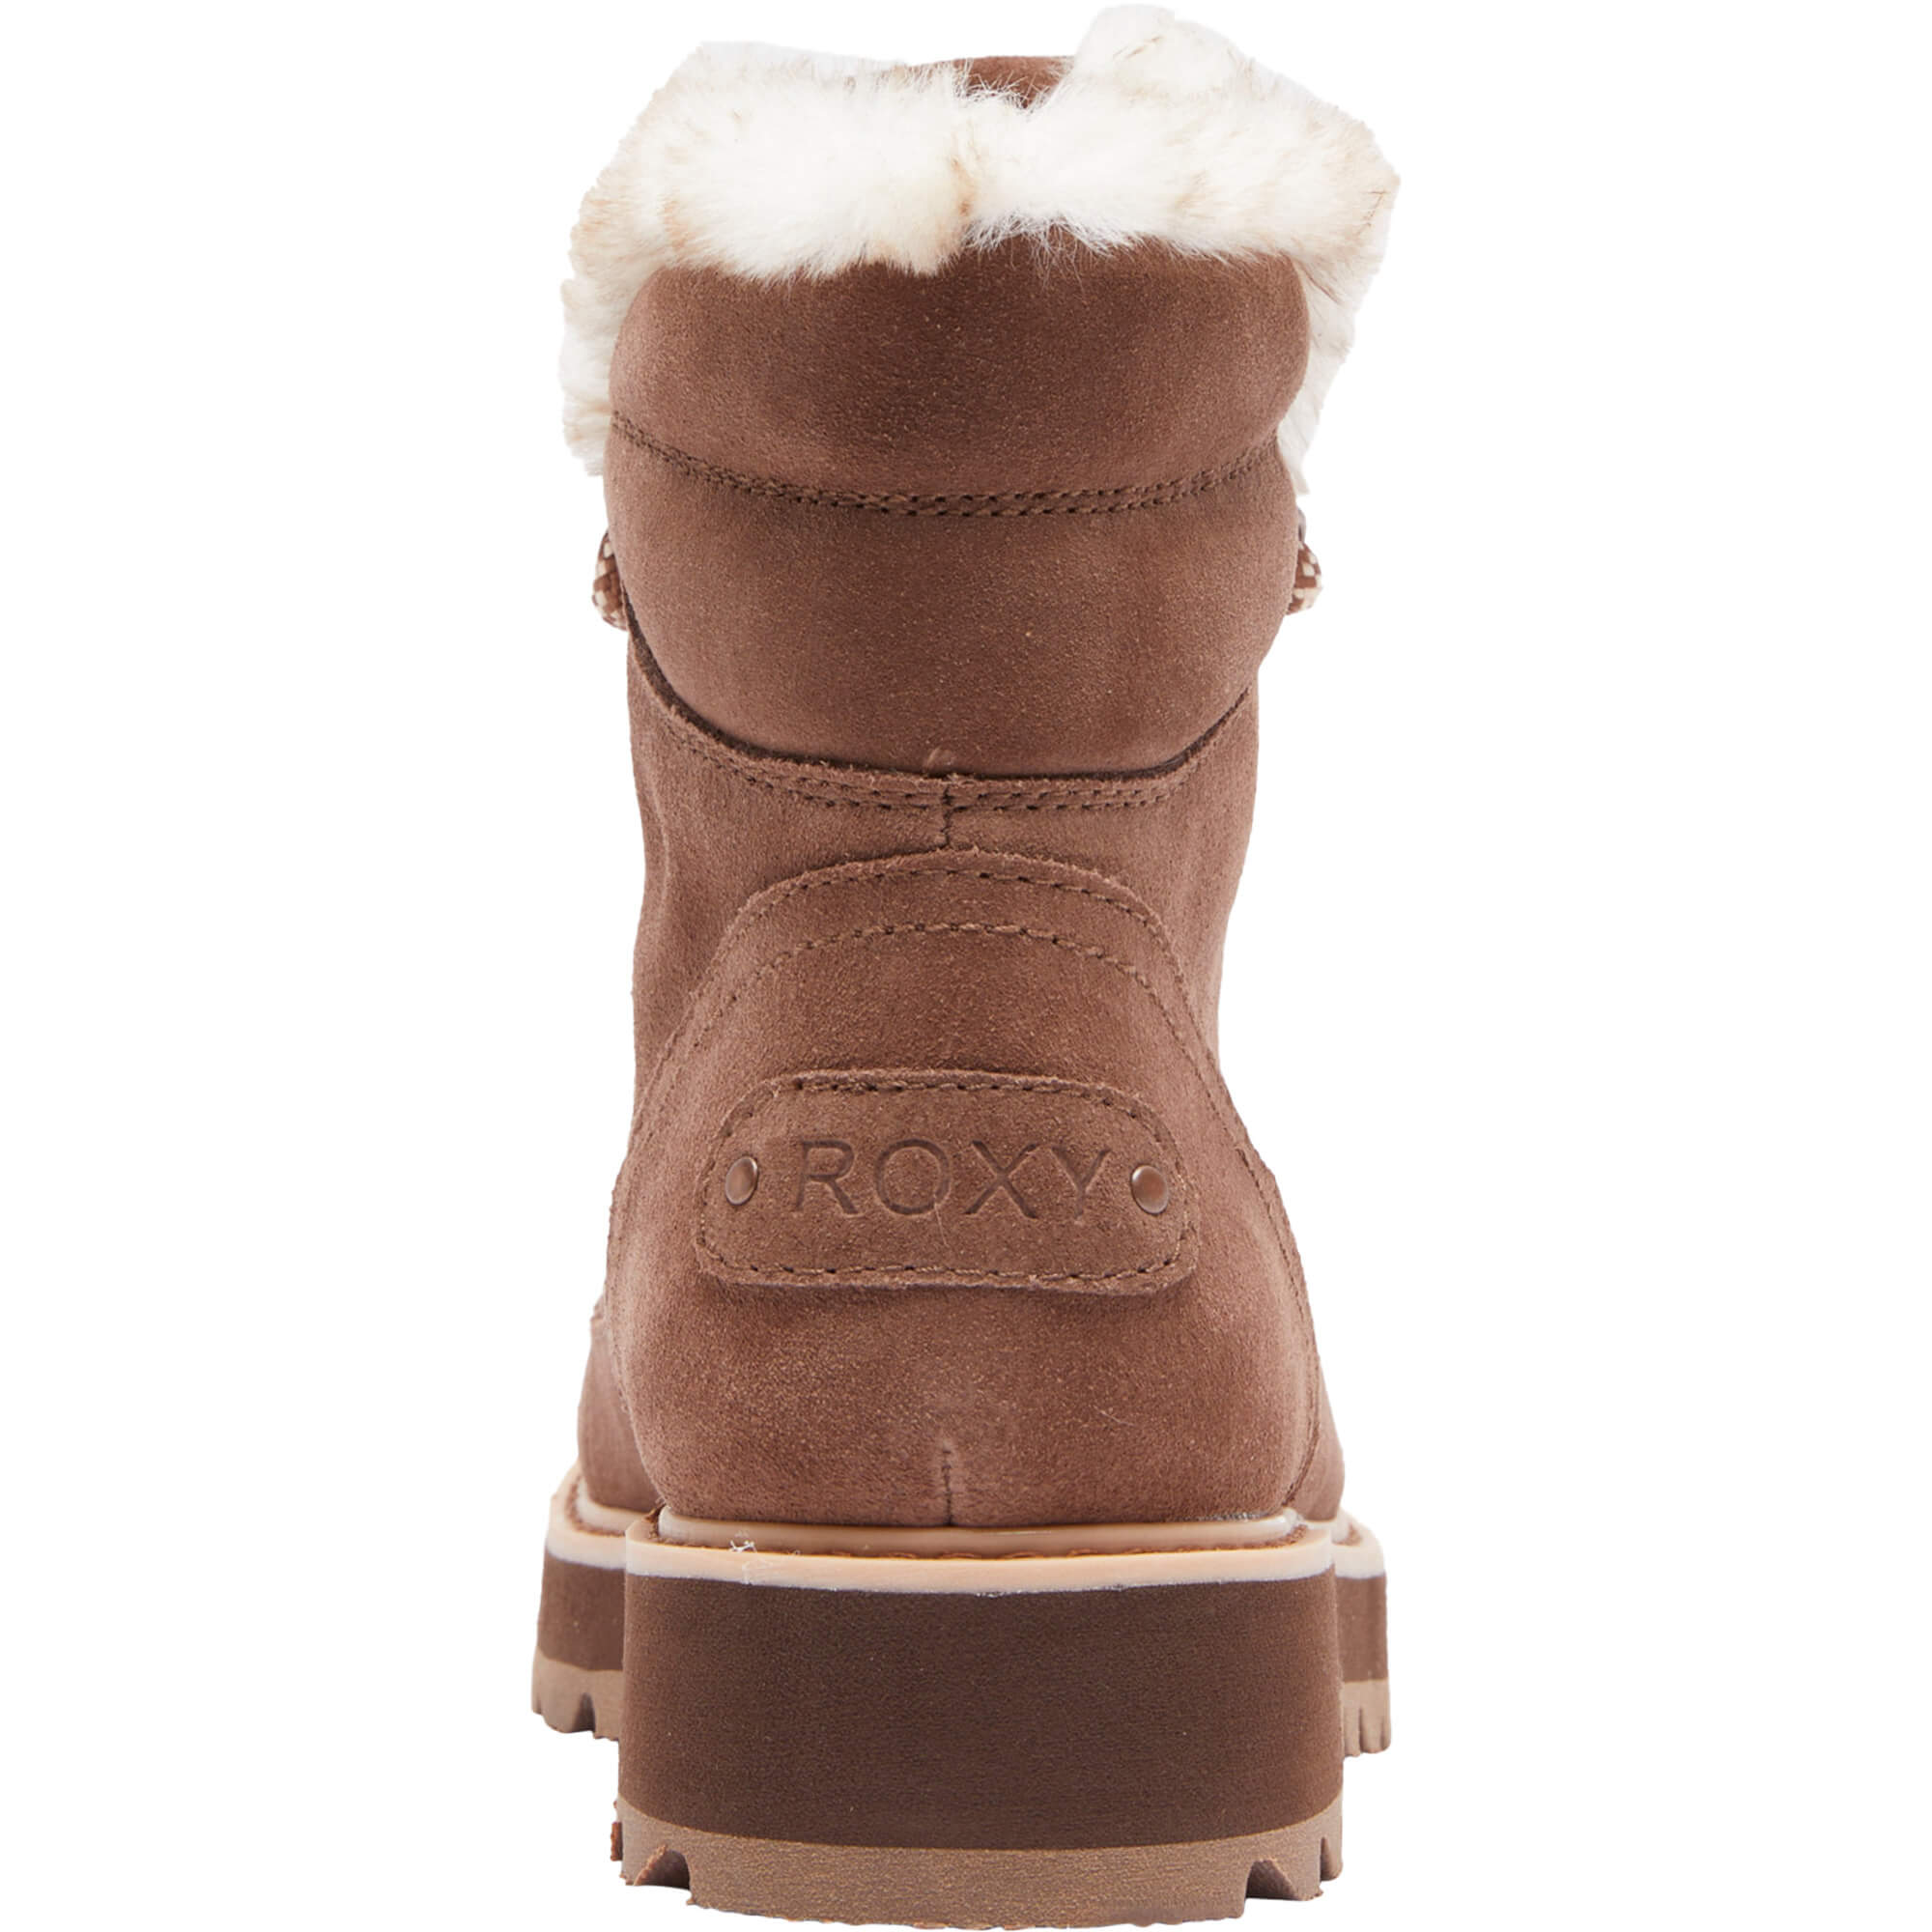 Roxy Sadie II Women's Snow/Winter Boots